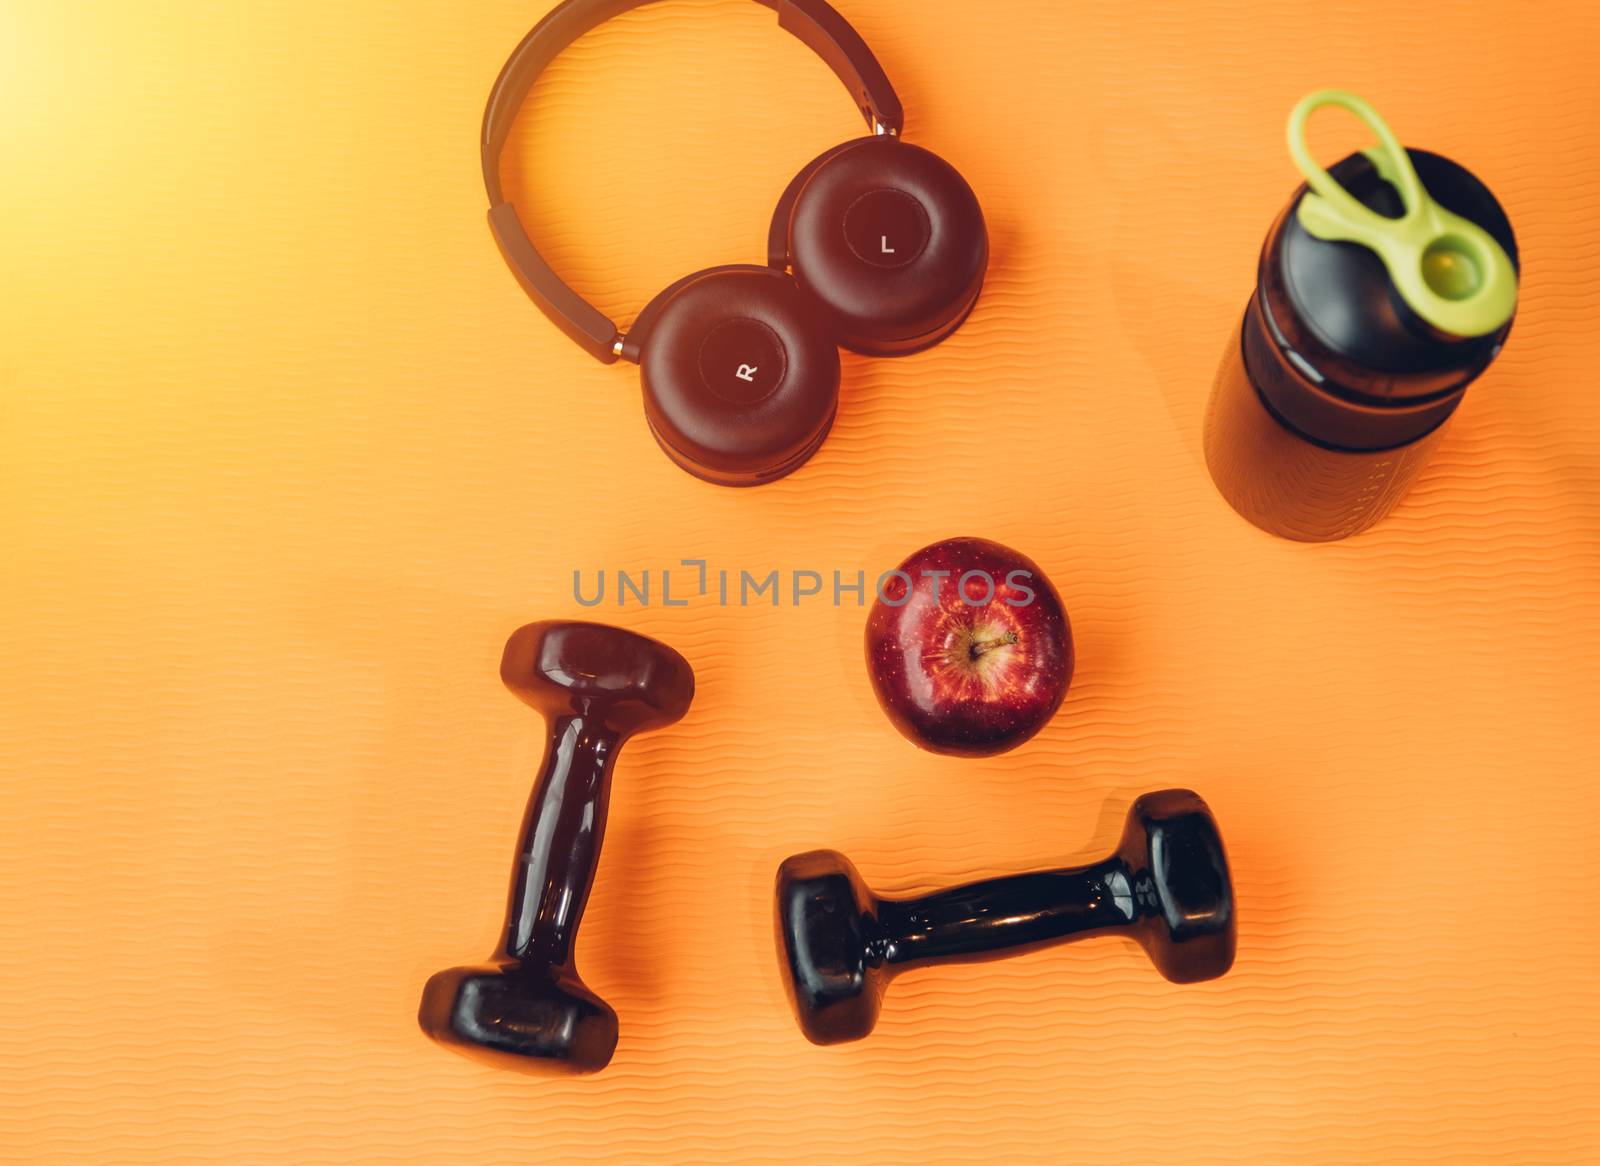 dumbbell, headphones equipment for workout exercise by Sorapop